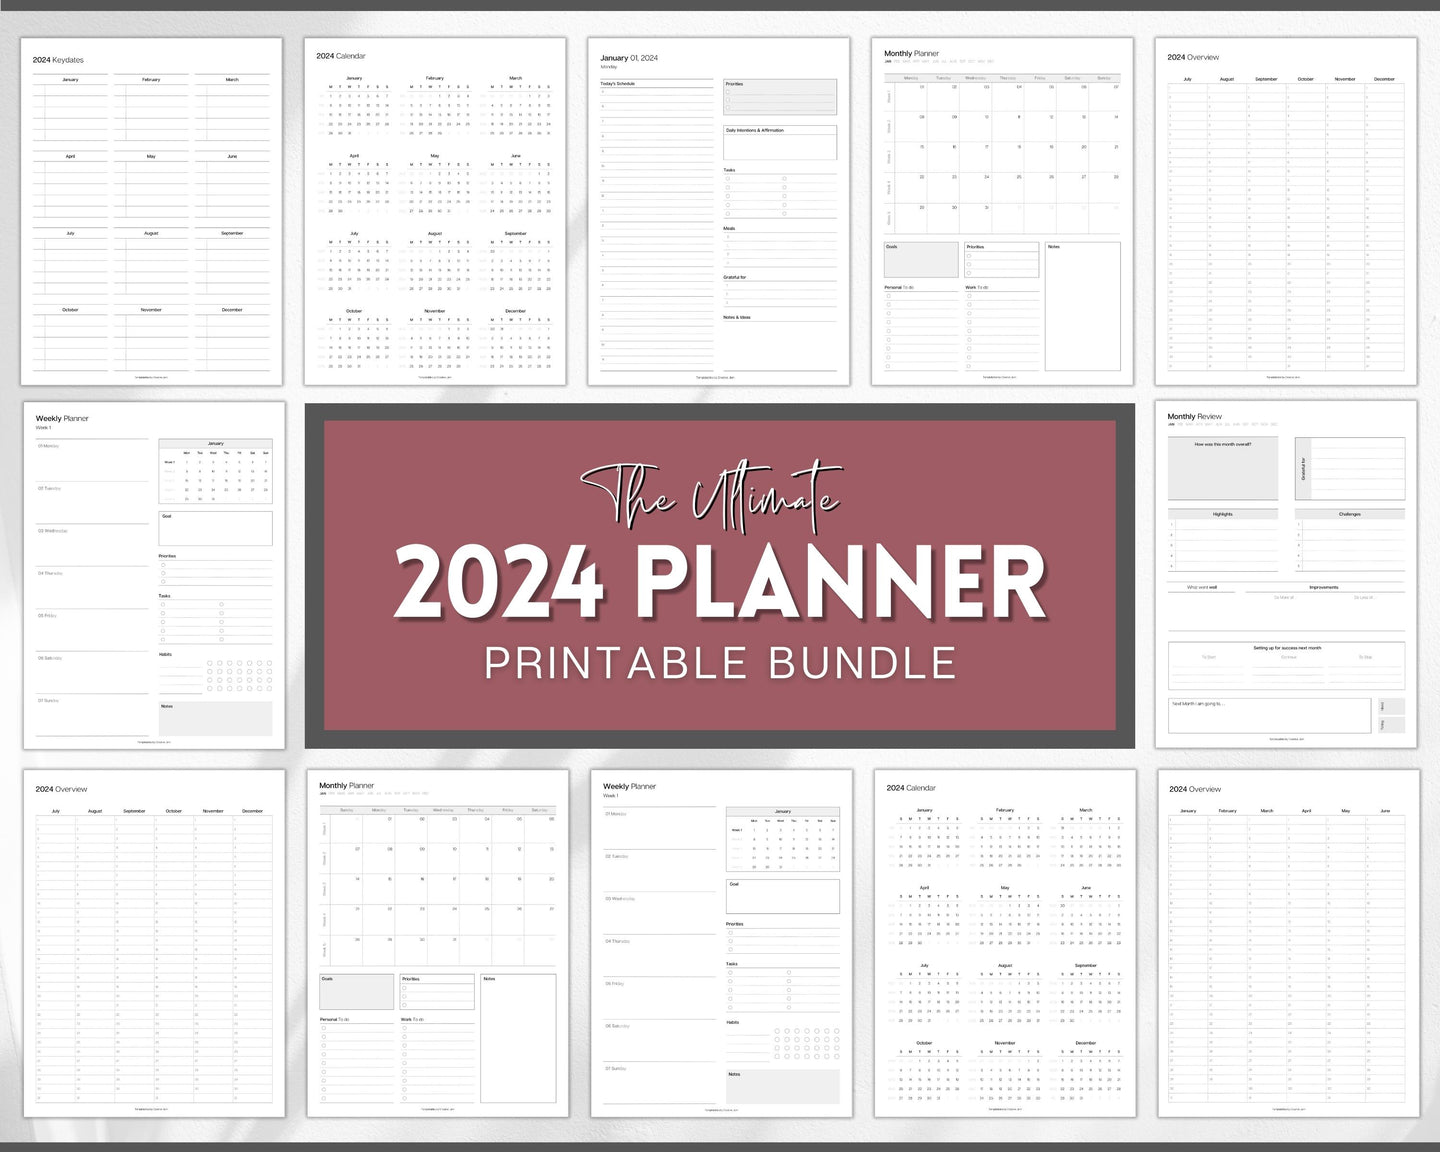 Monthly Activity Planner 2024, Calendar